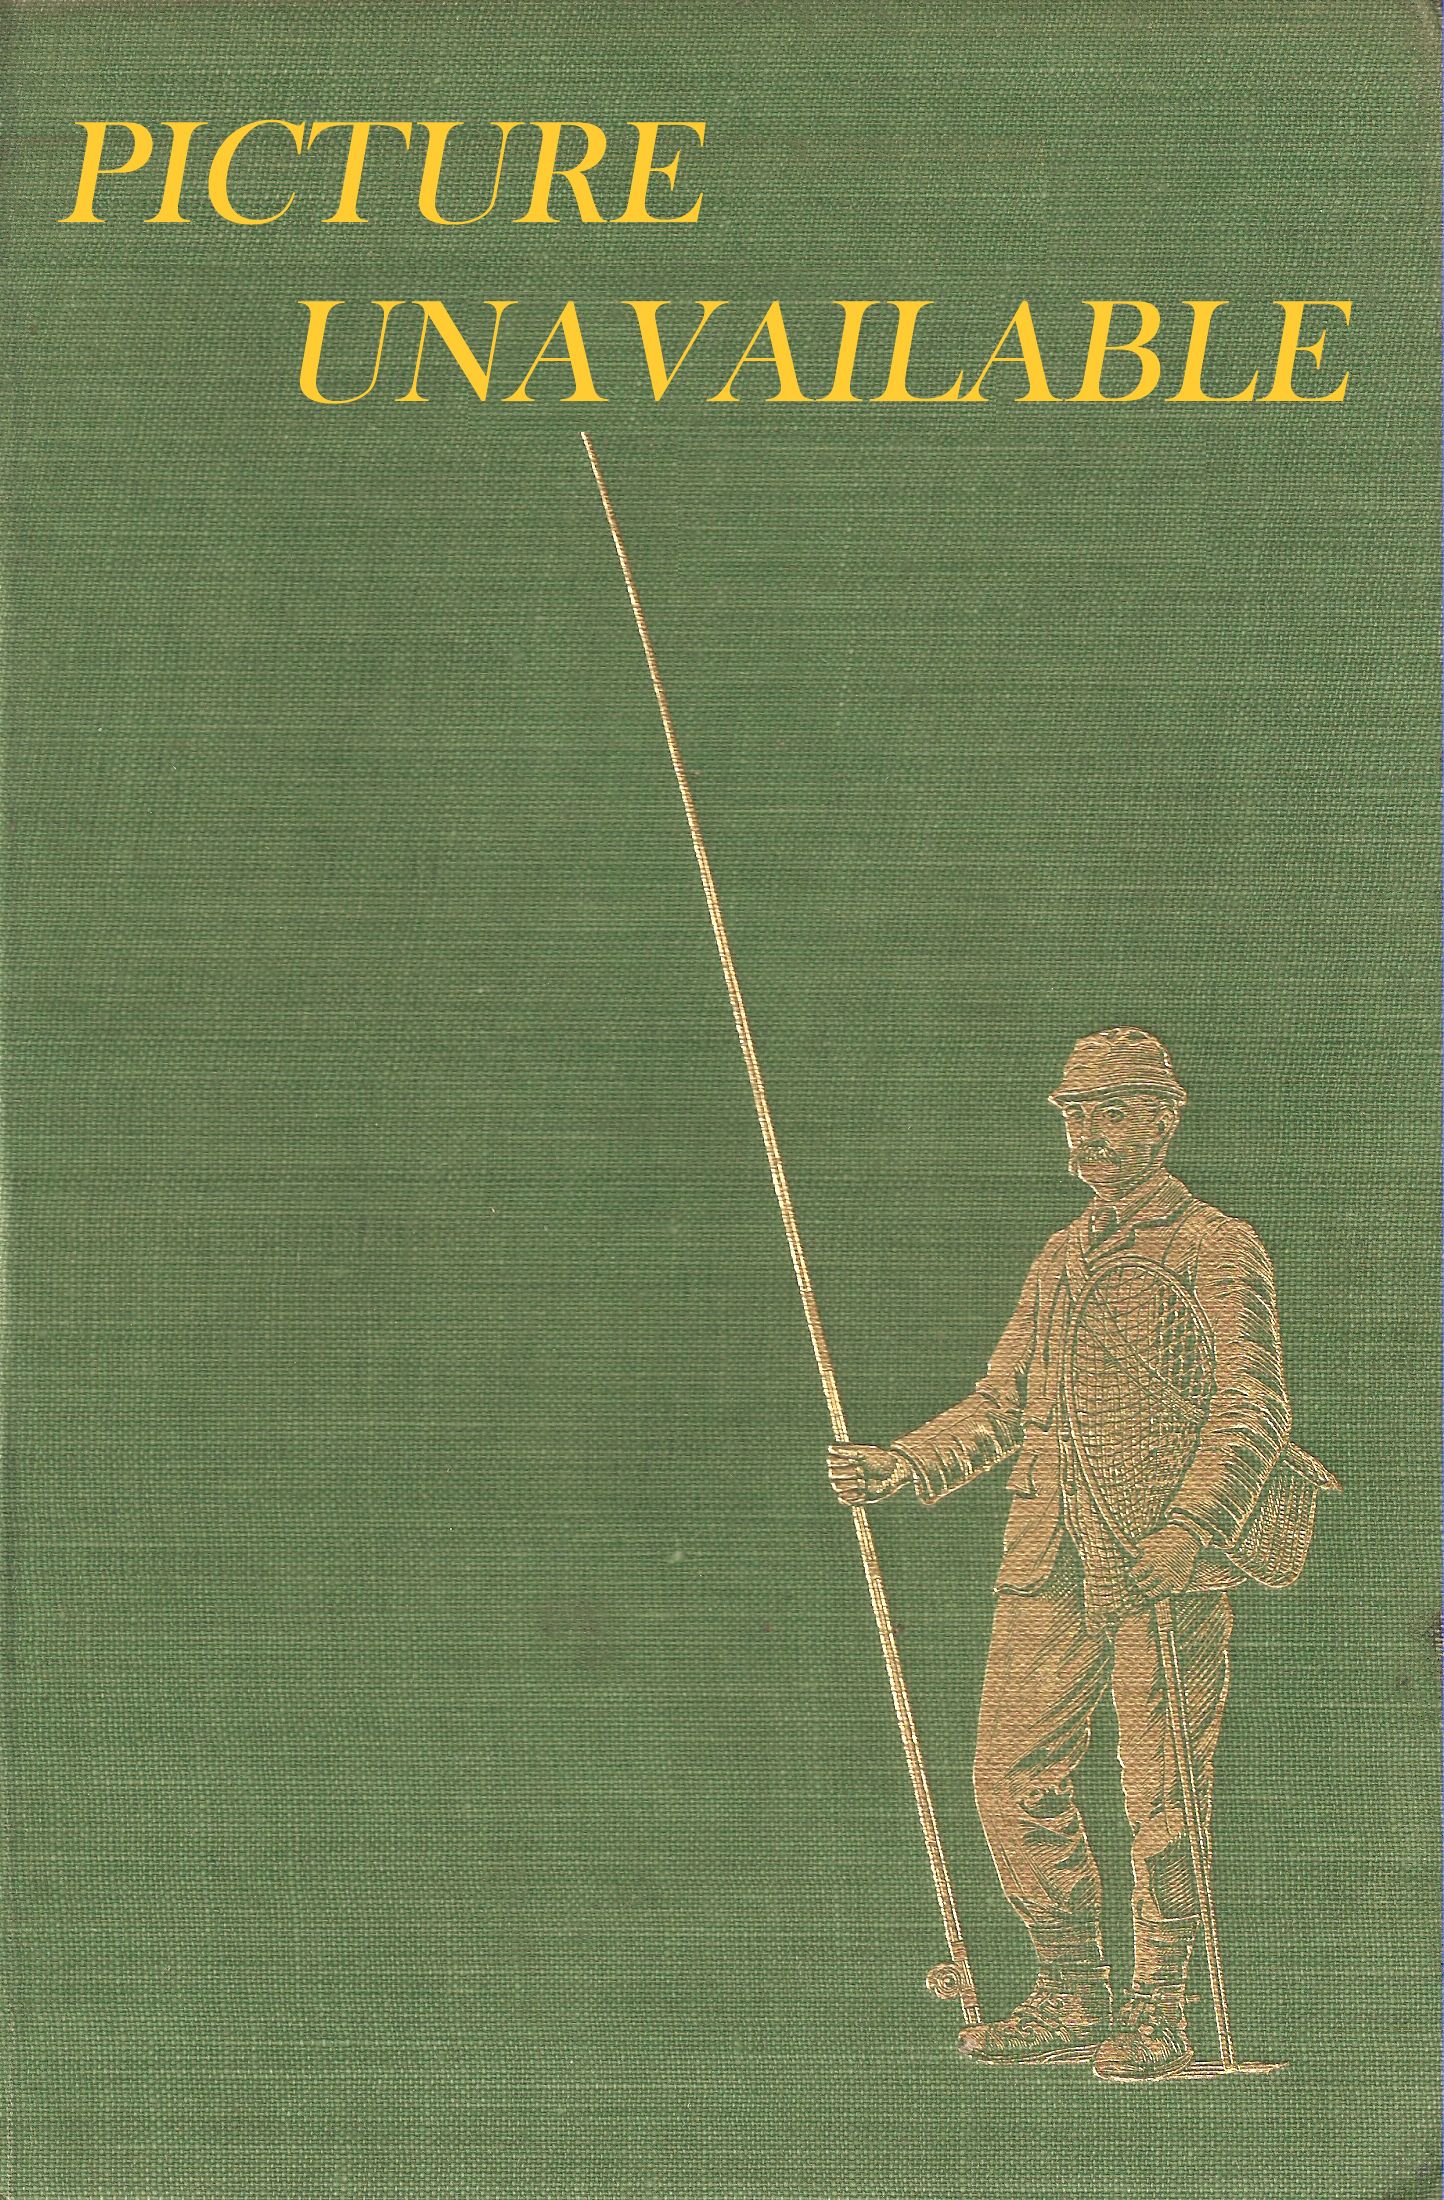 CREEL: A FISHING MAGAZINE. Volume 2, number 3. September 1964.